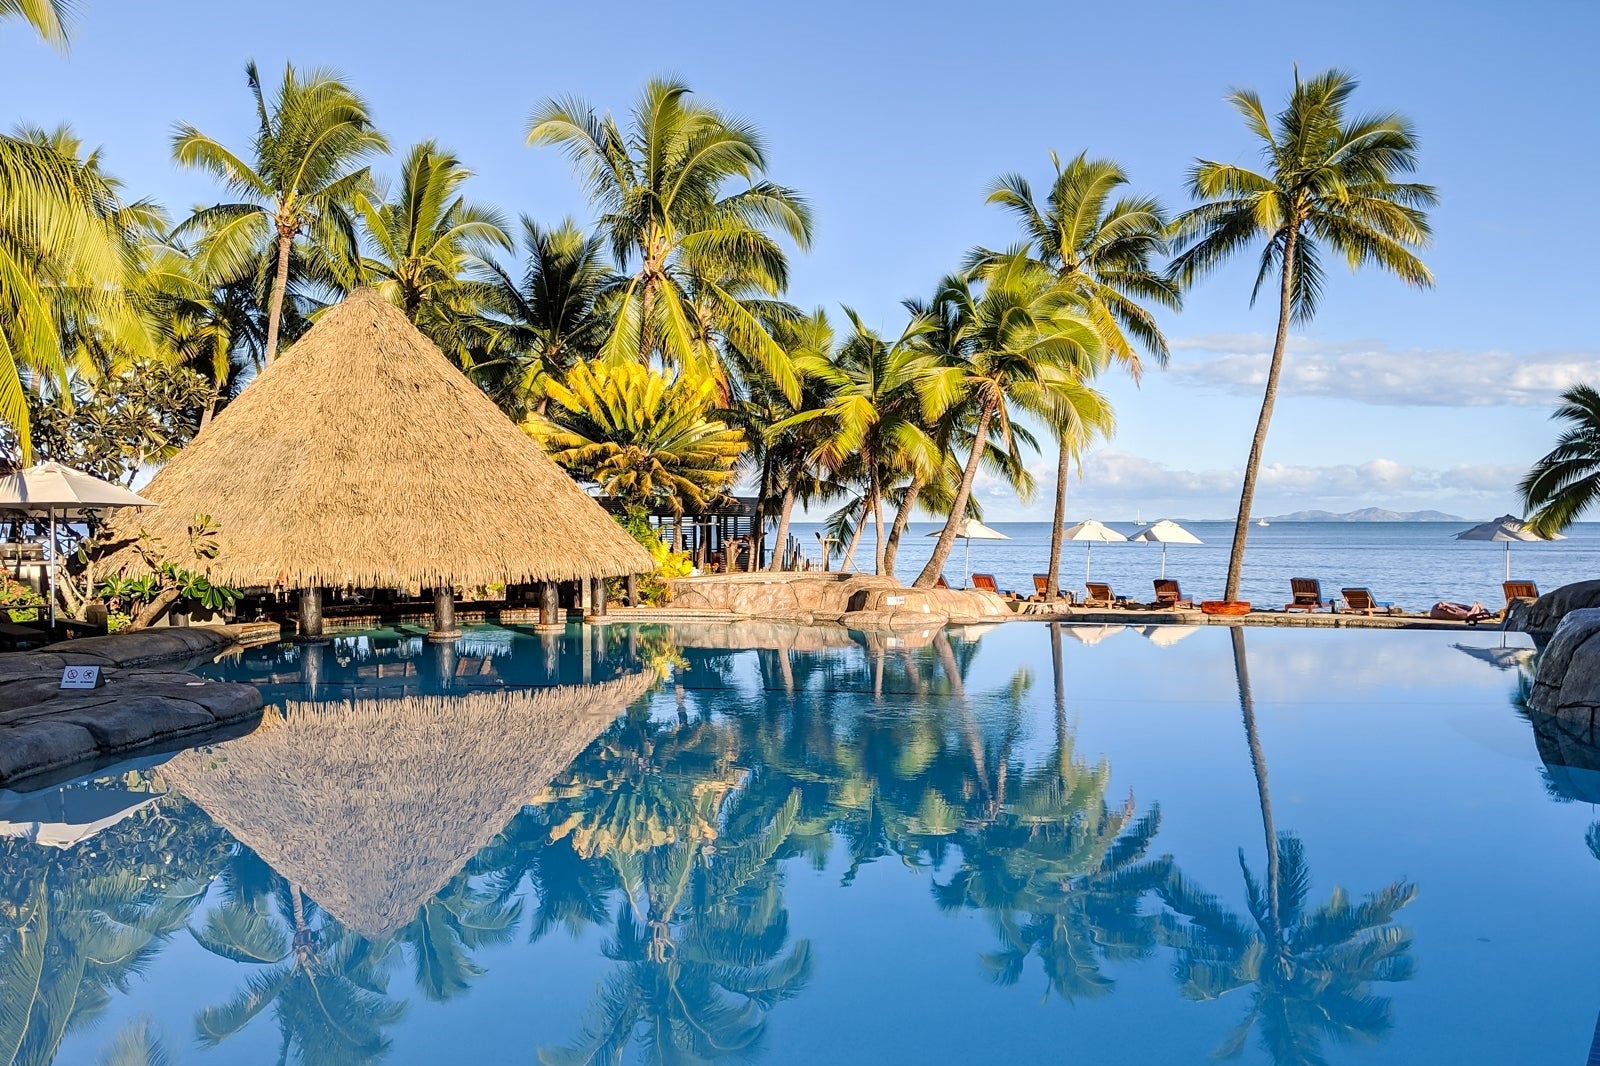 Fiji hopes to open to international travel by Nov. 1